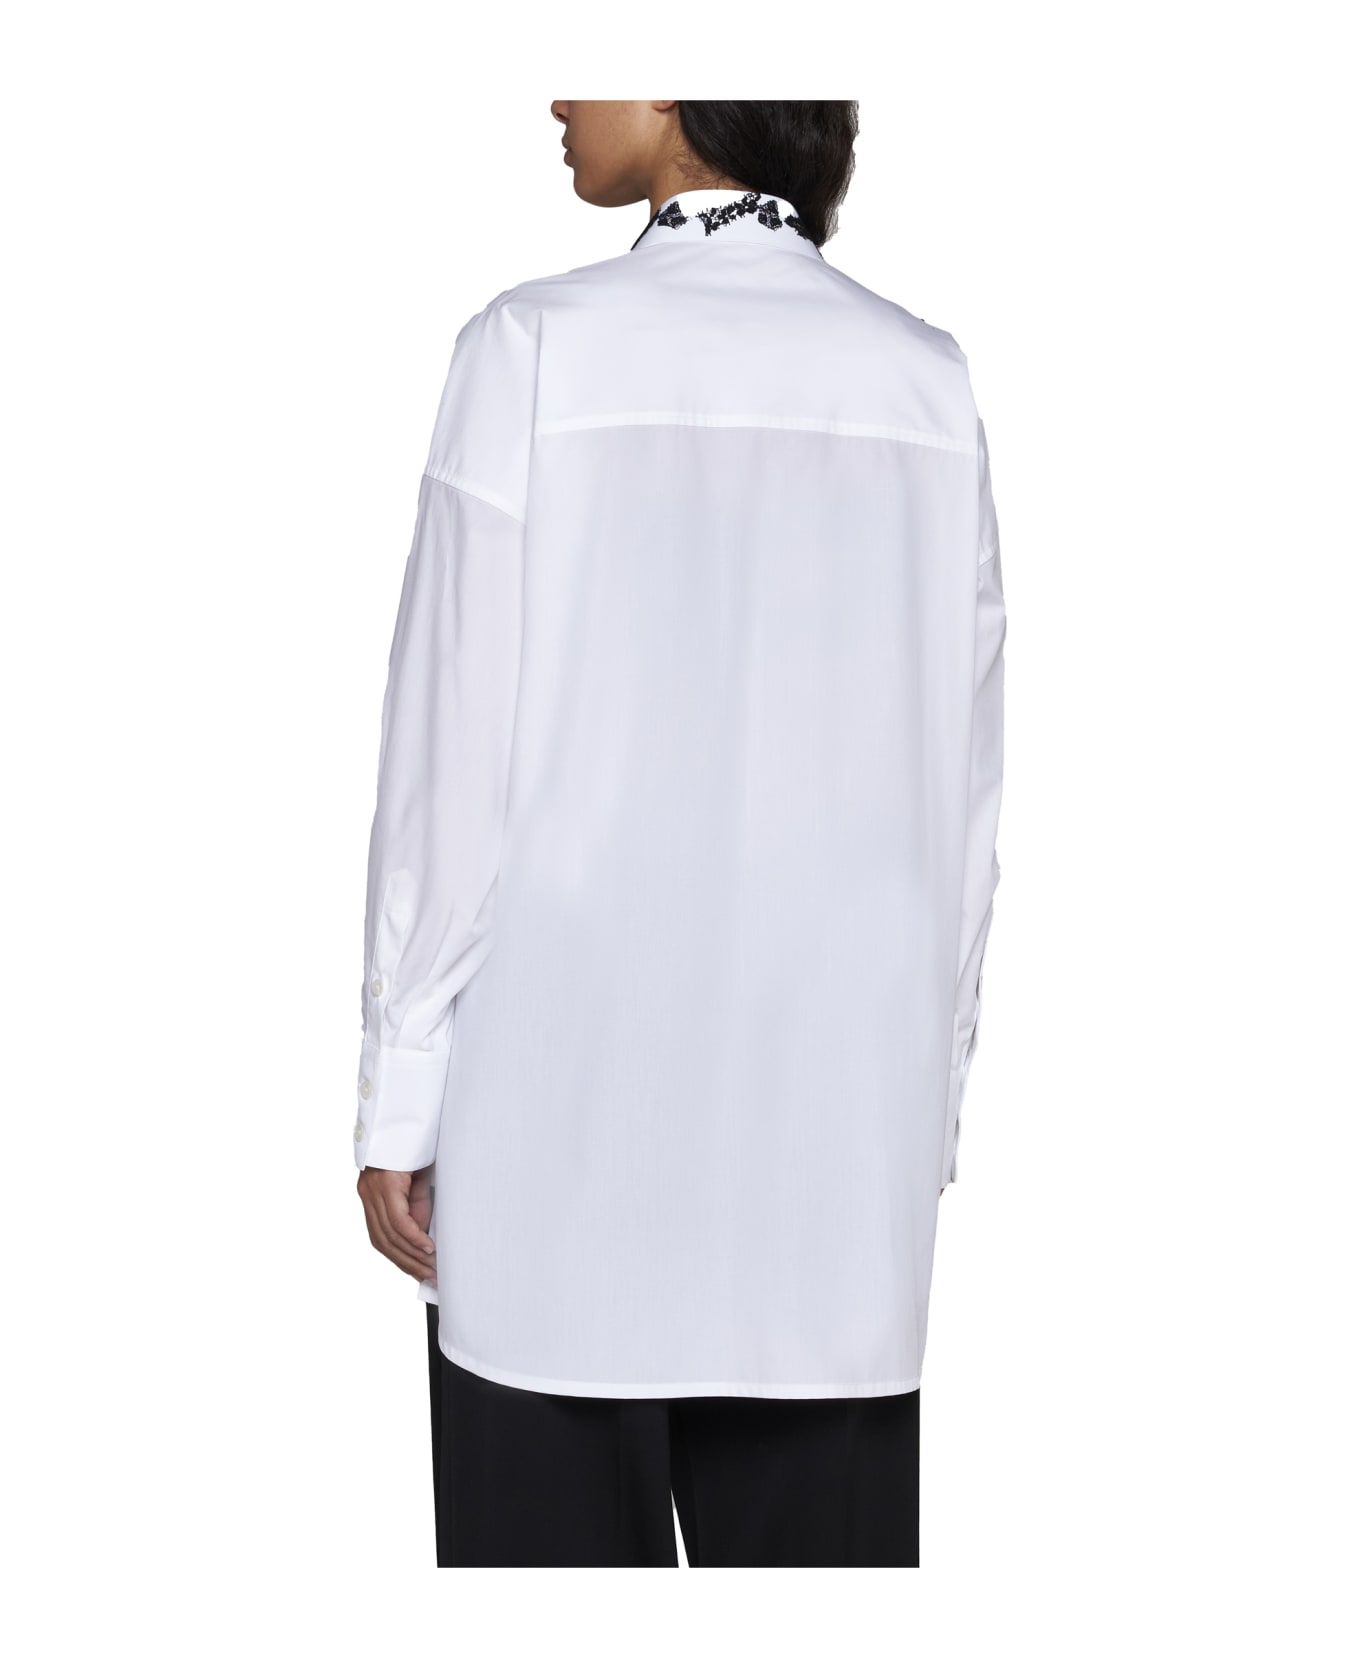 Dolce & Gabbana Lace Appliques Oversize Shirt - Bianco otticco